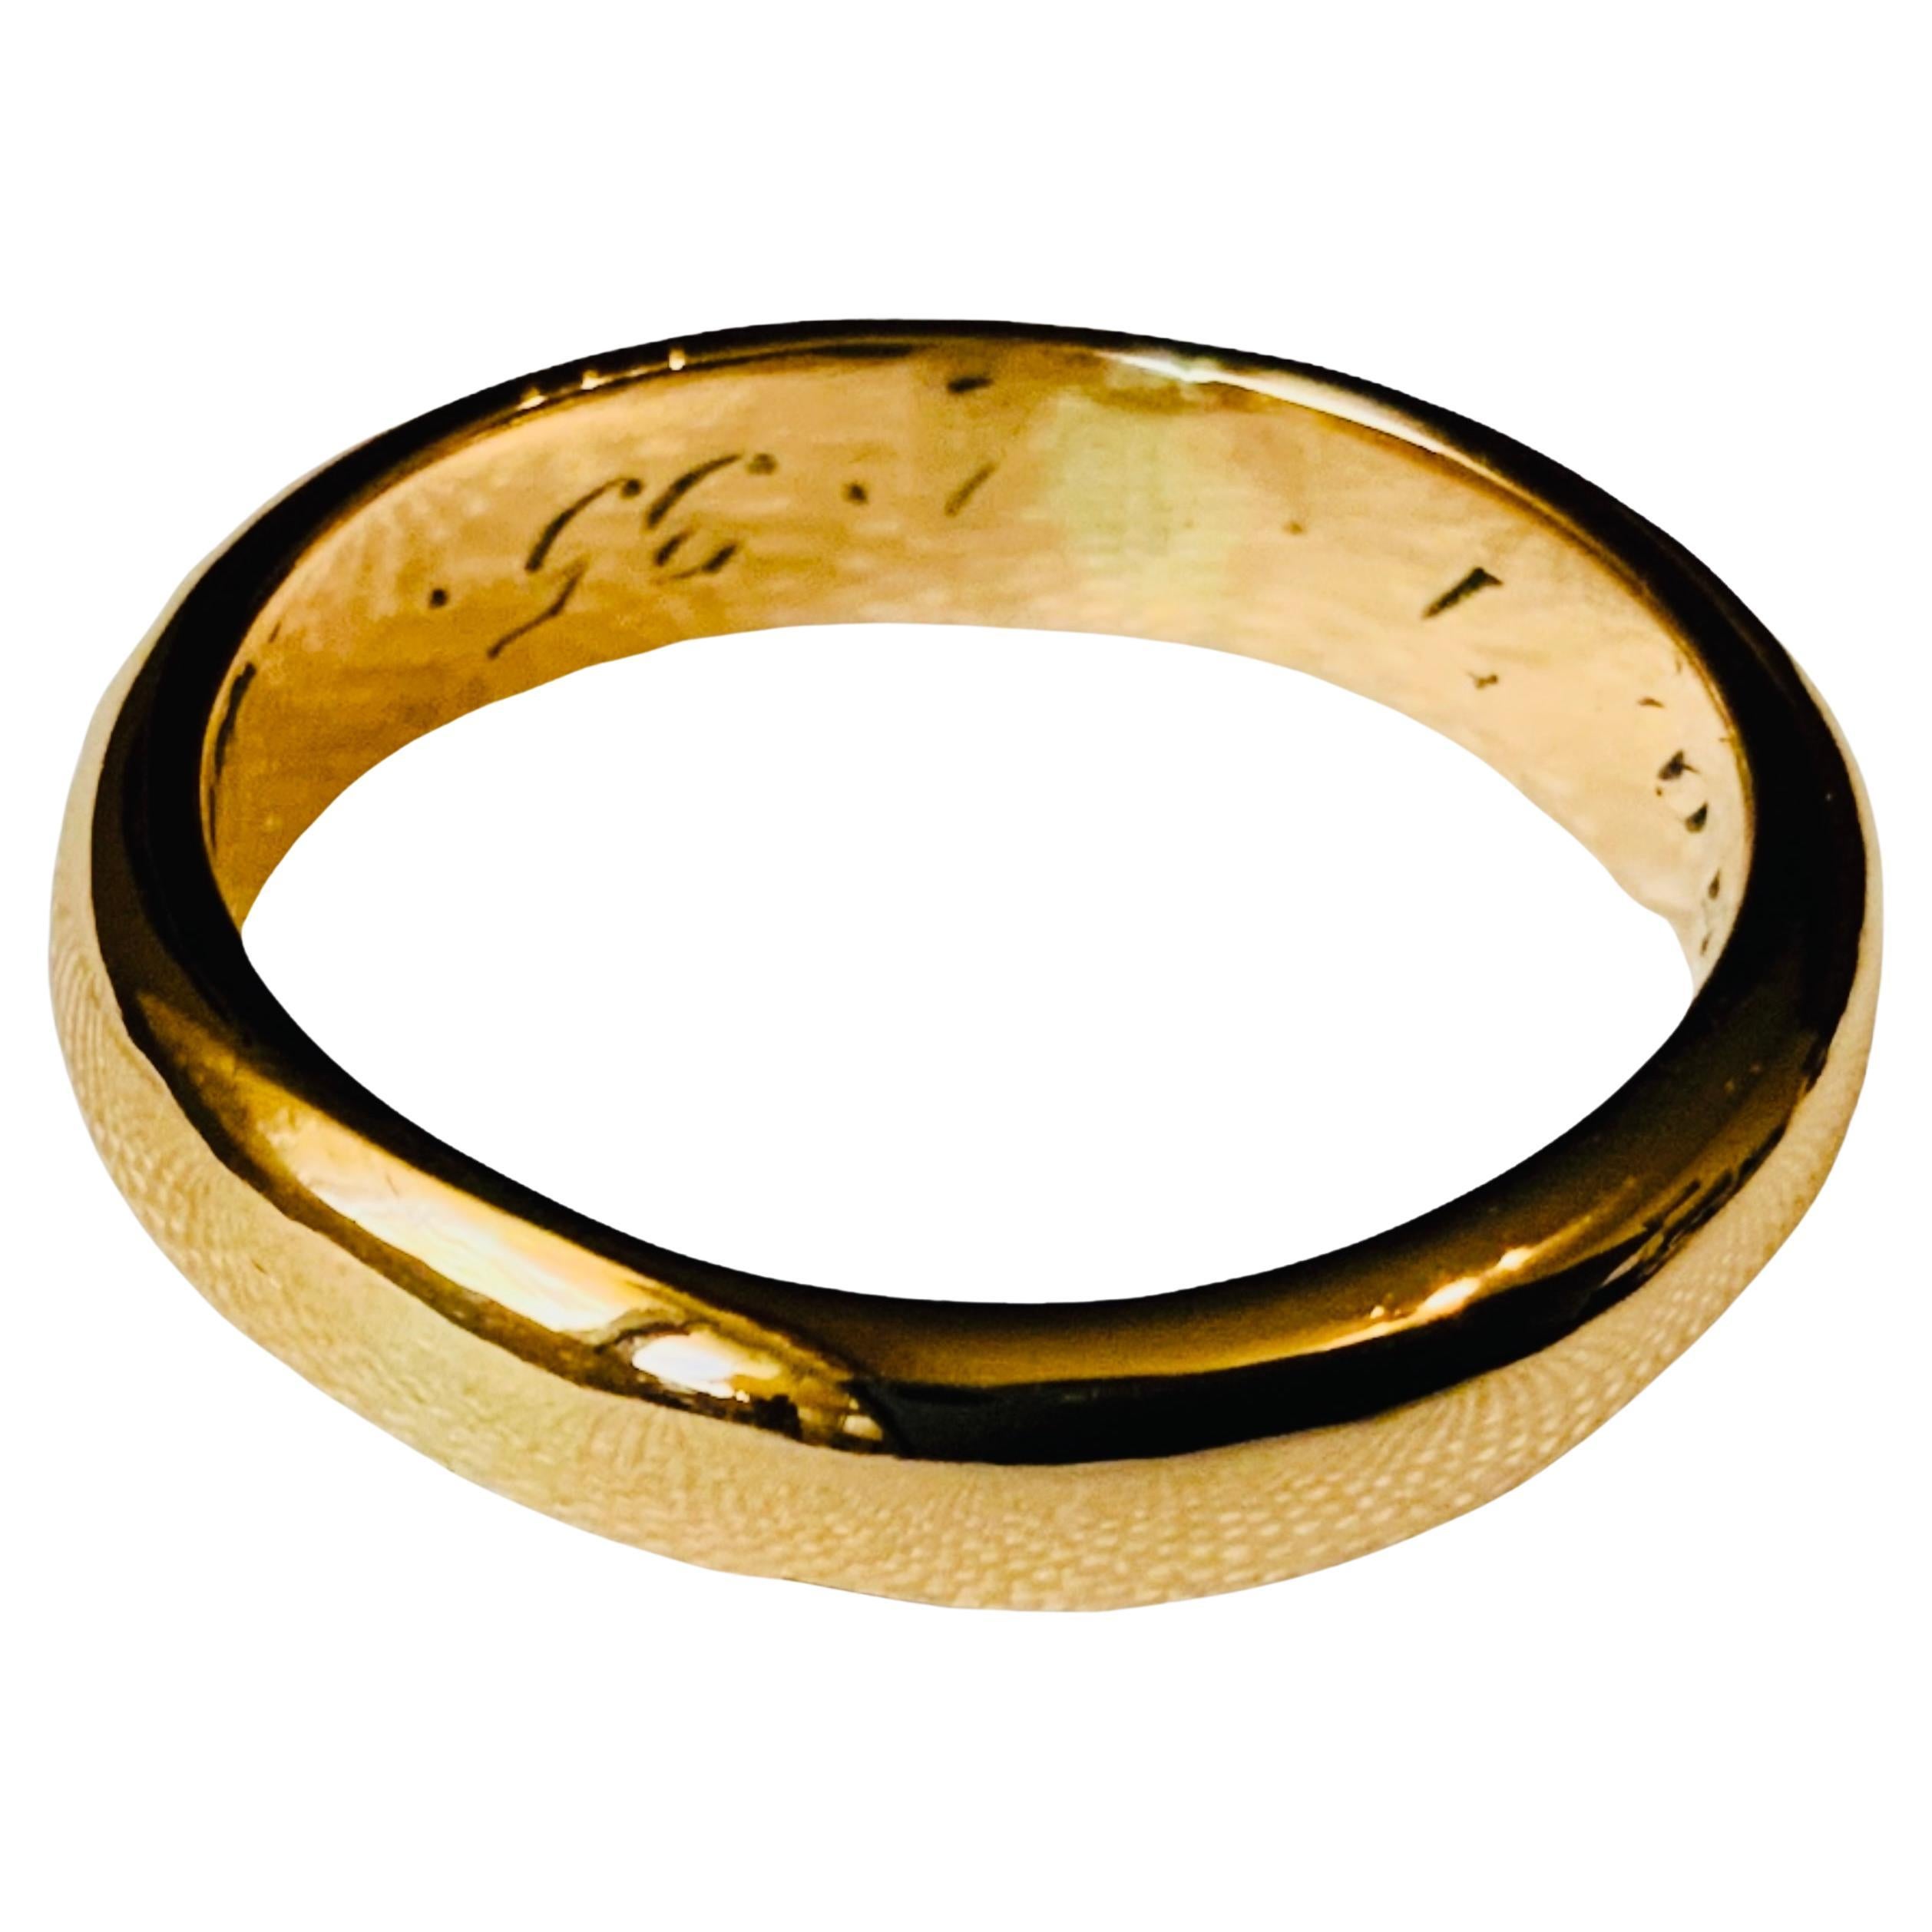  Gold Band Wedding Ring